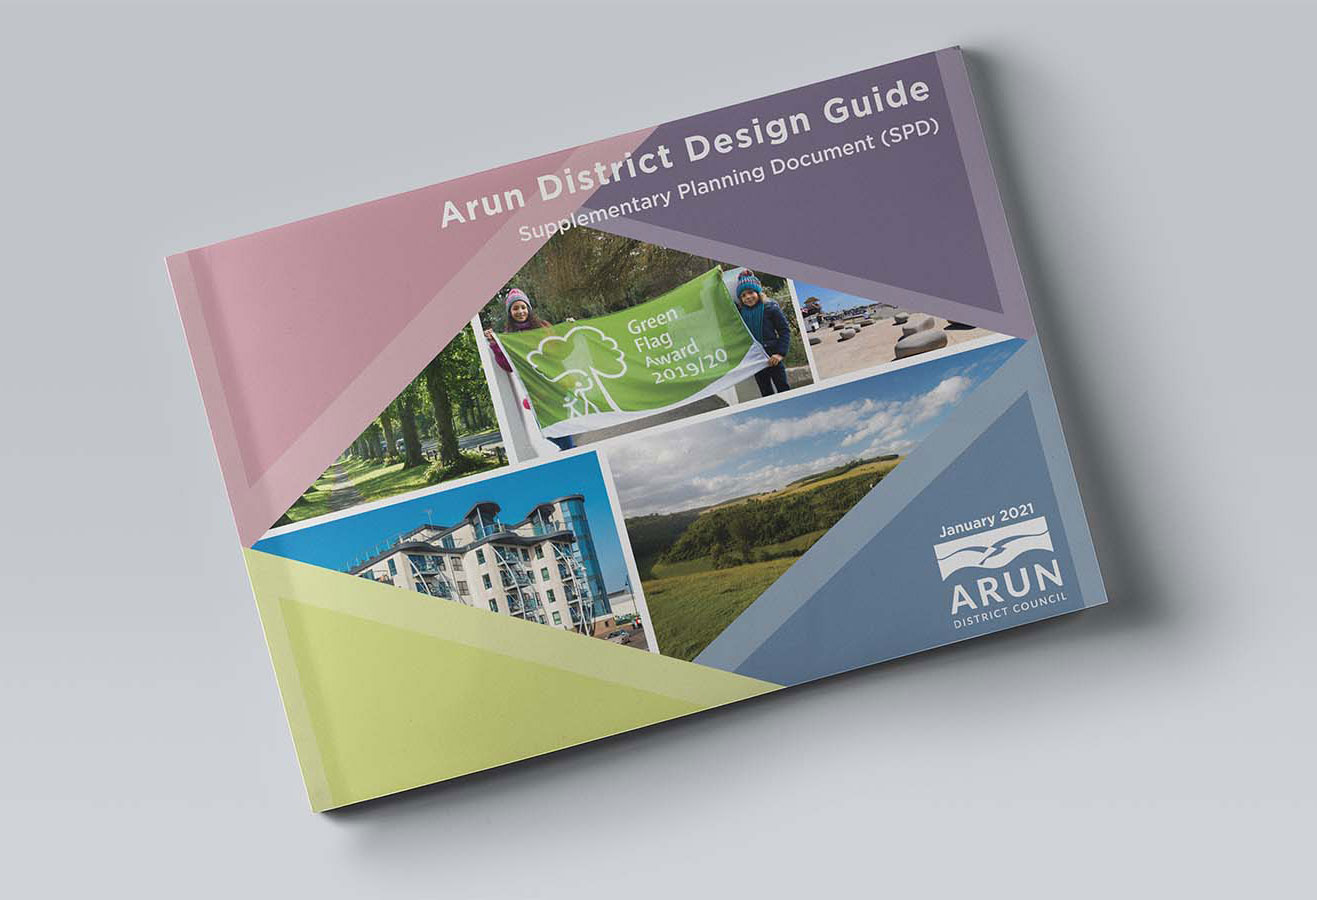 Arun Design Guide